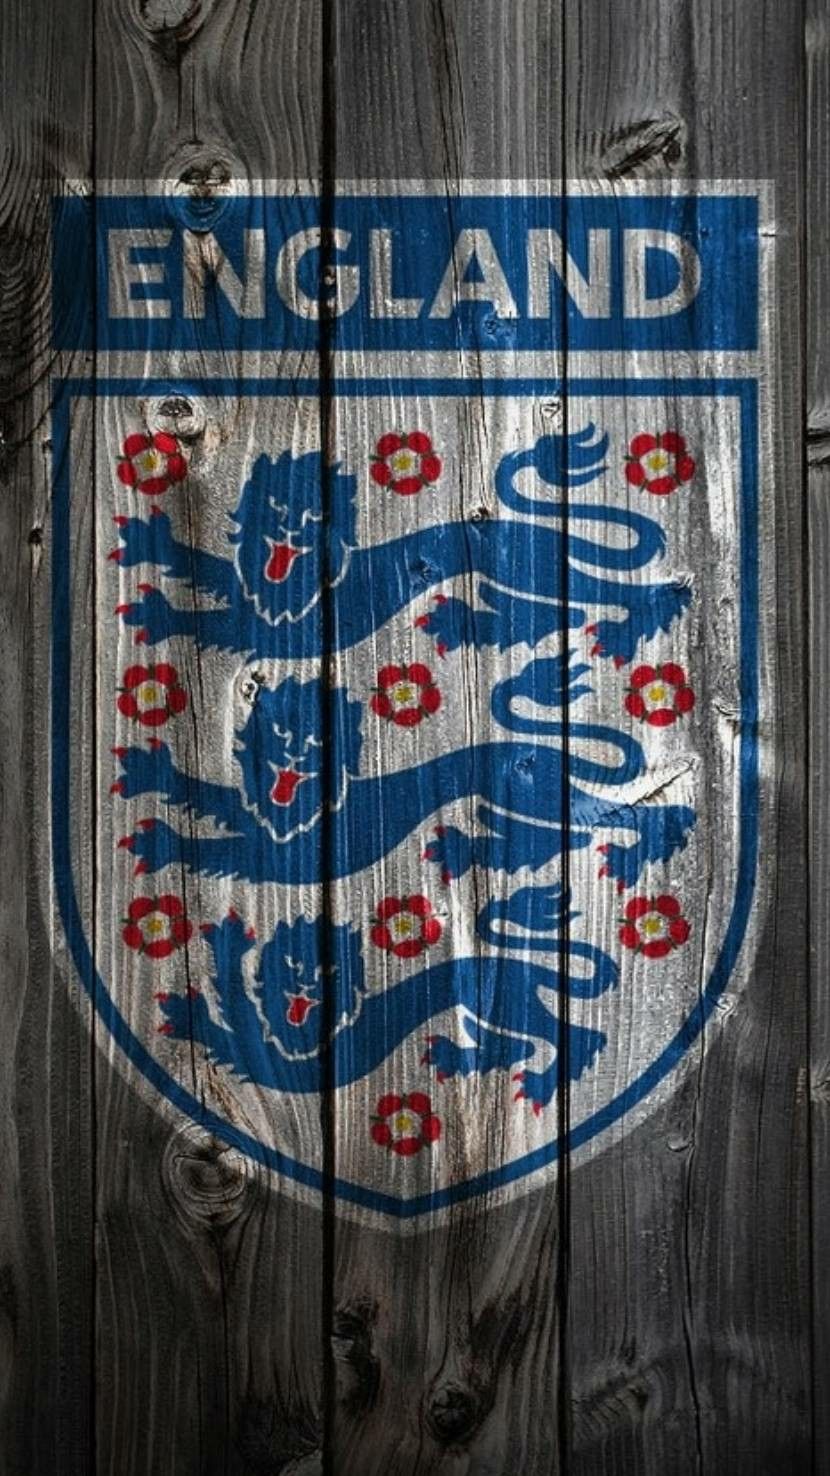 England phone wallpaper. England football team, Team wallpaper, England flag wallpaper